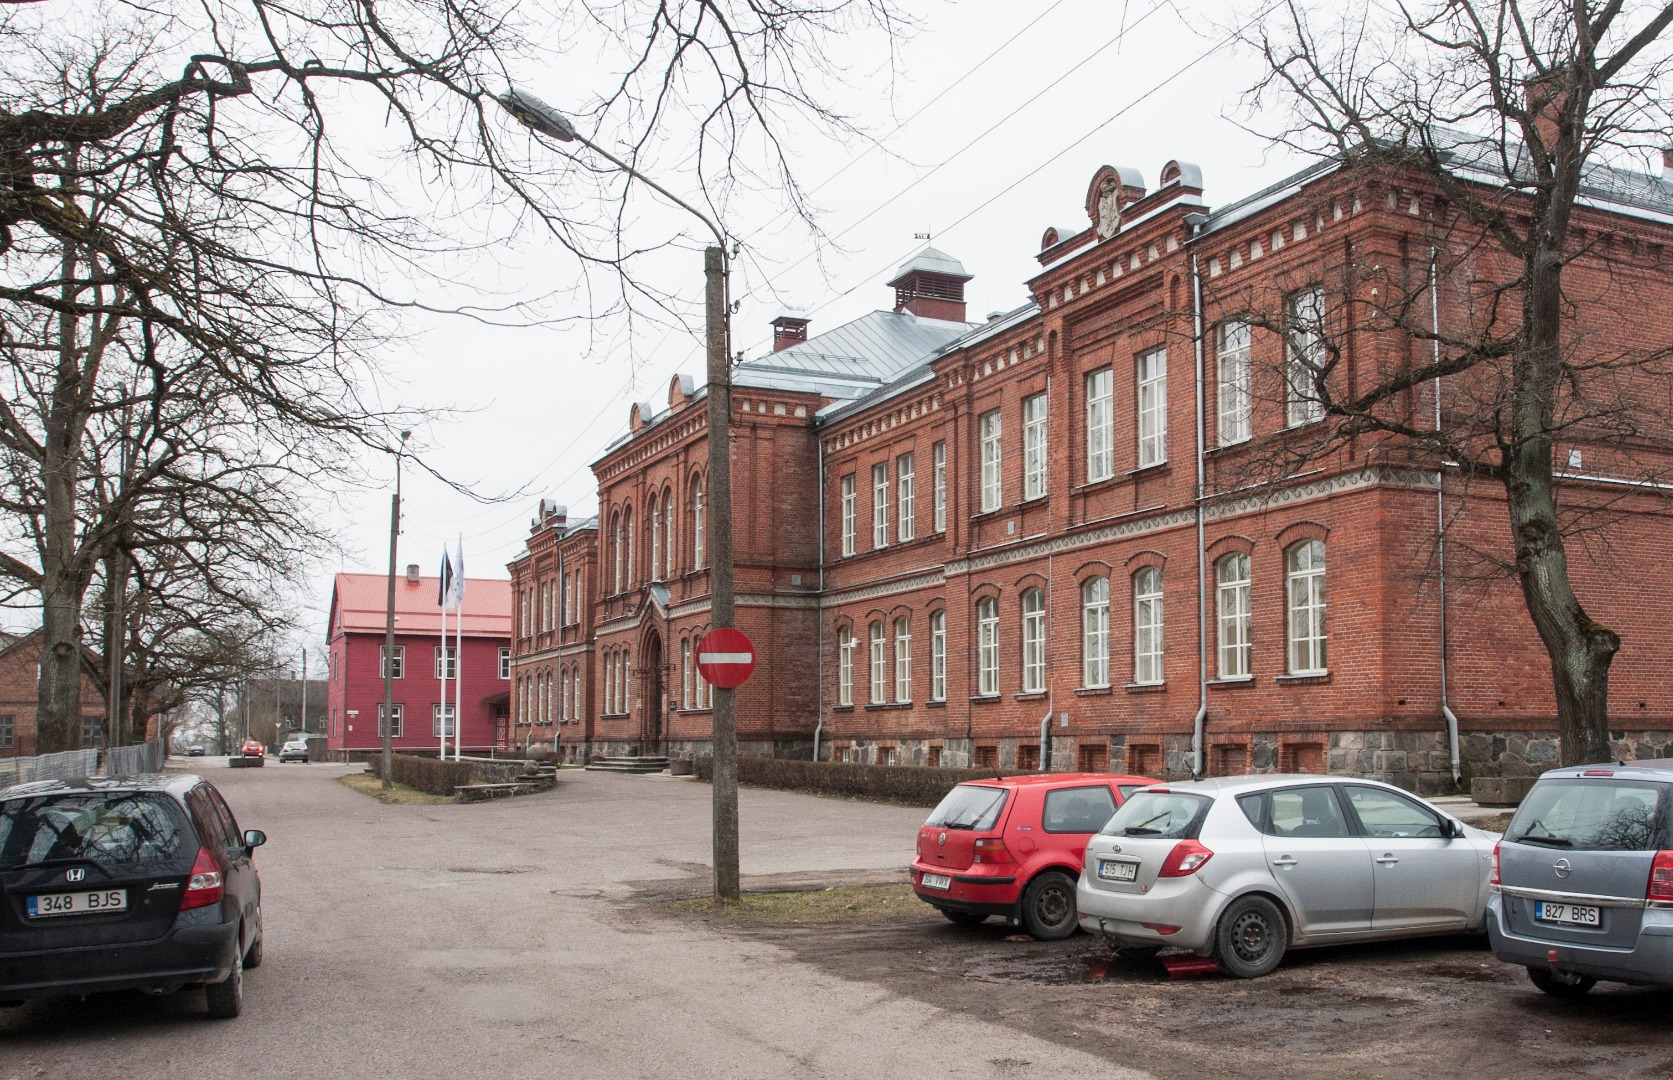 Photo with printed choir underpaper: Viljandi II Secondary School. Photo under the underpaper: "W.Staden, Jurjew" rephoto